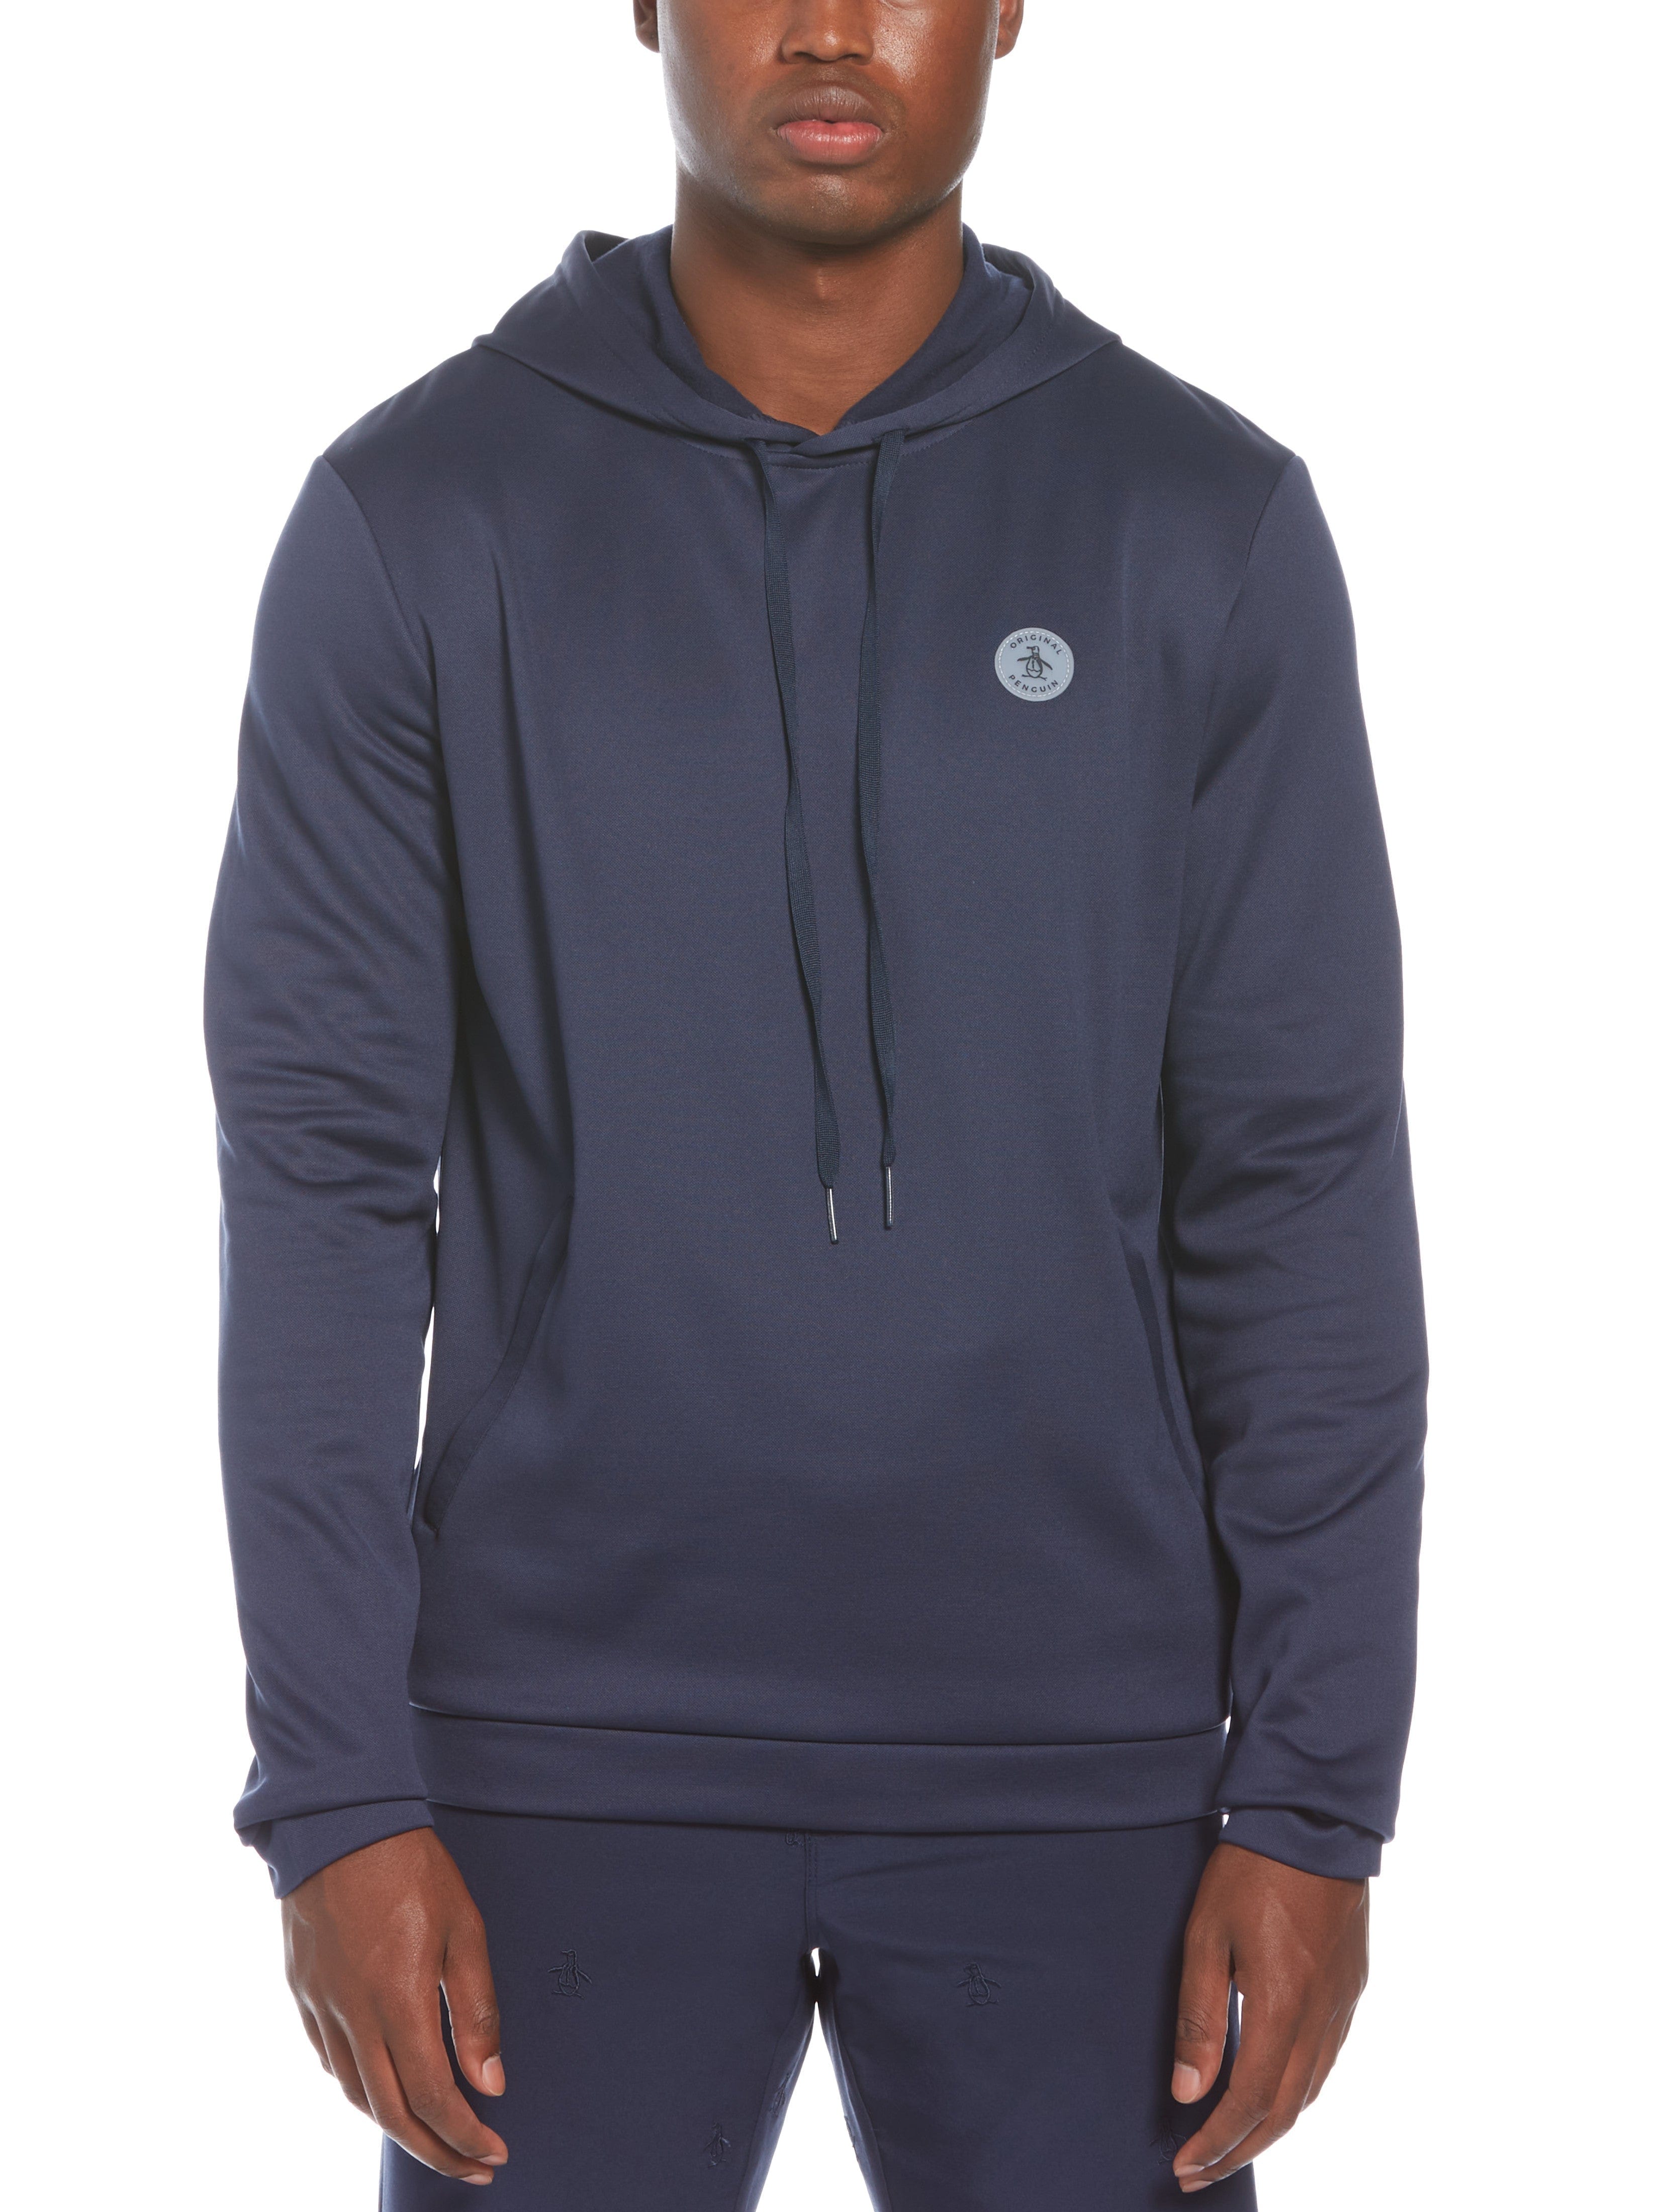 Original Penguin Mens Midweight Layering Golf Hoodie Jacket Top, Size Medium, Dark Navy Blue, 100% Polyester | Golf Apparel Shop